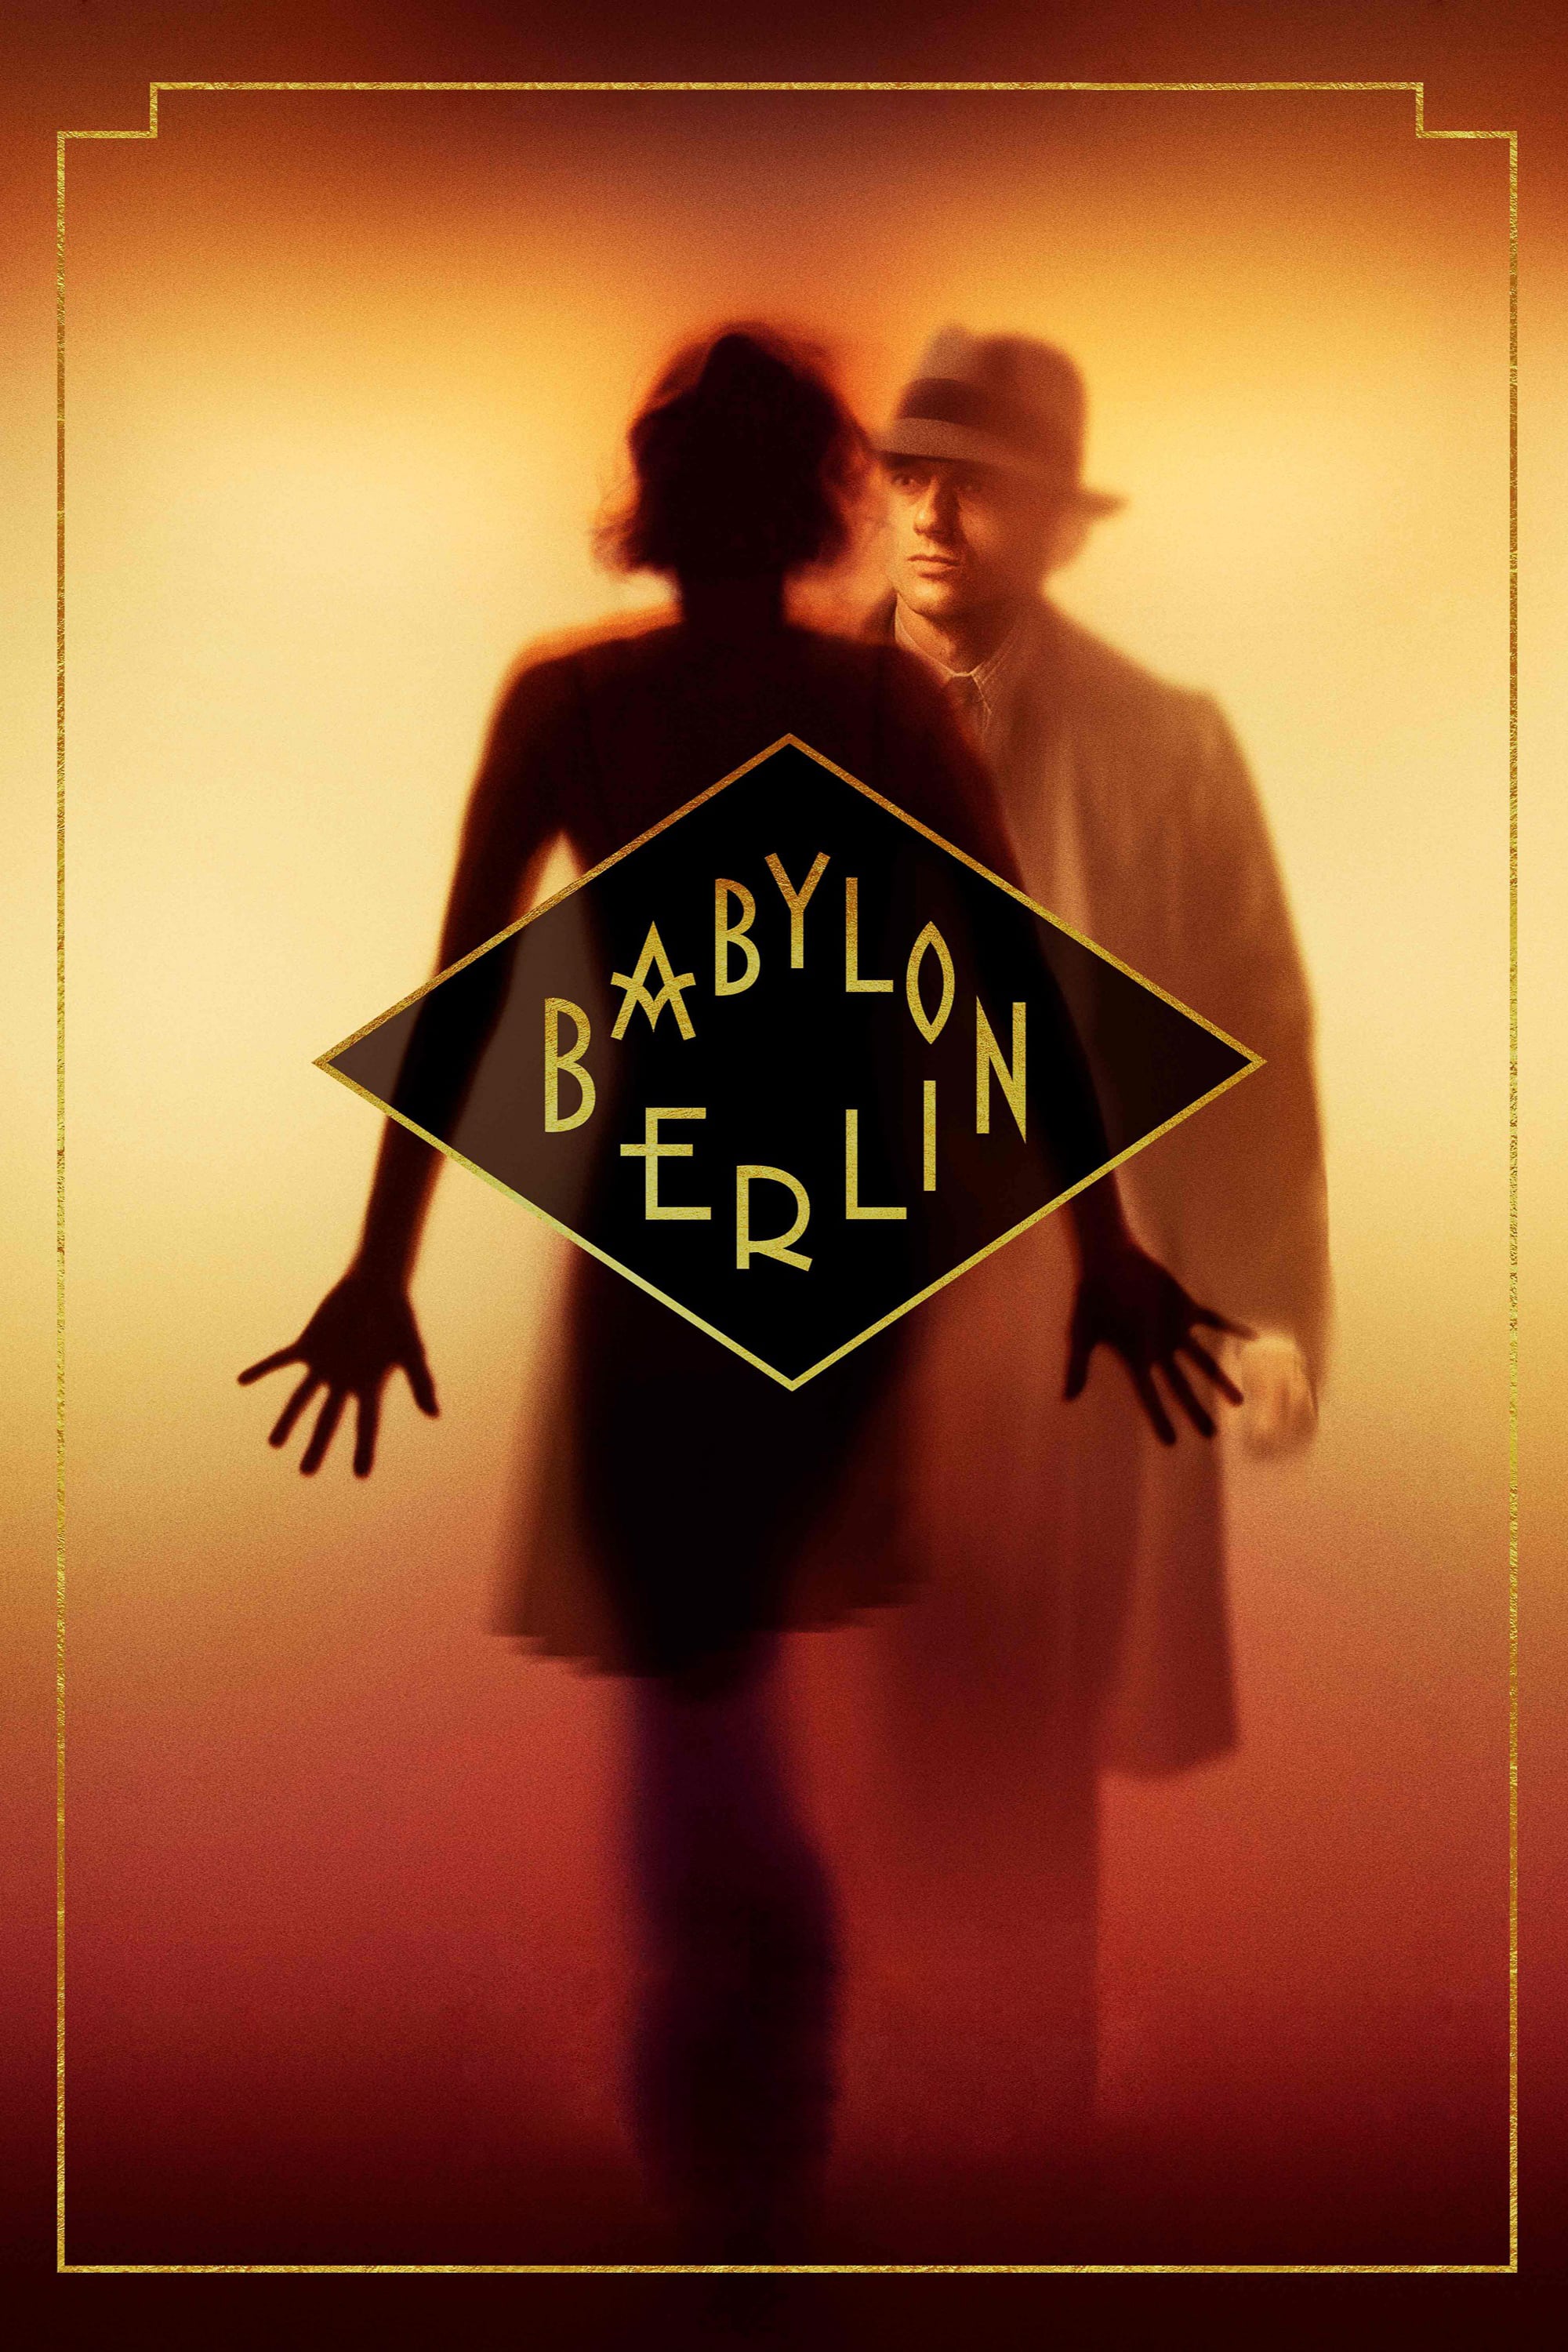 Babylon Berlin rating